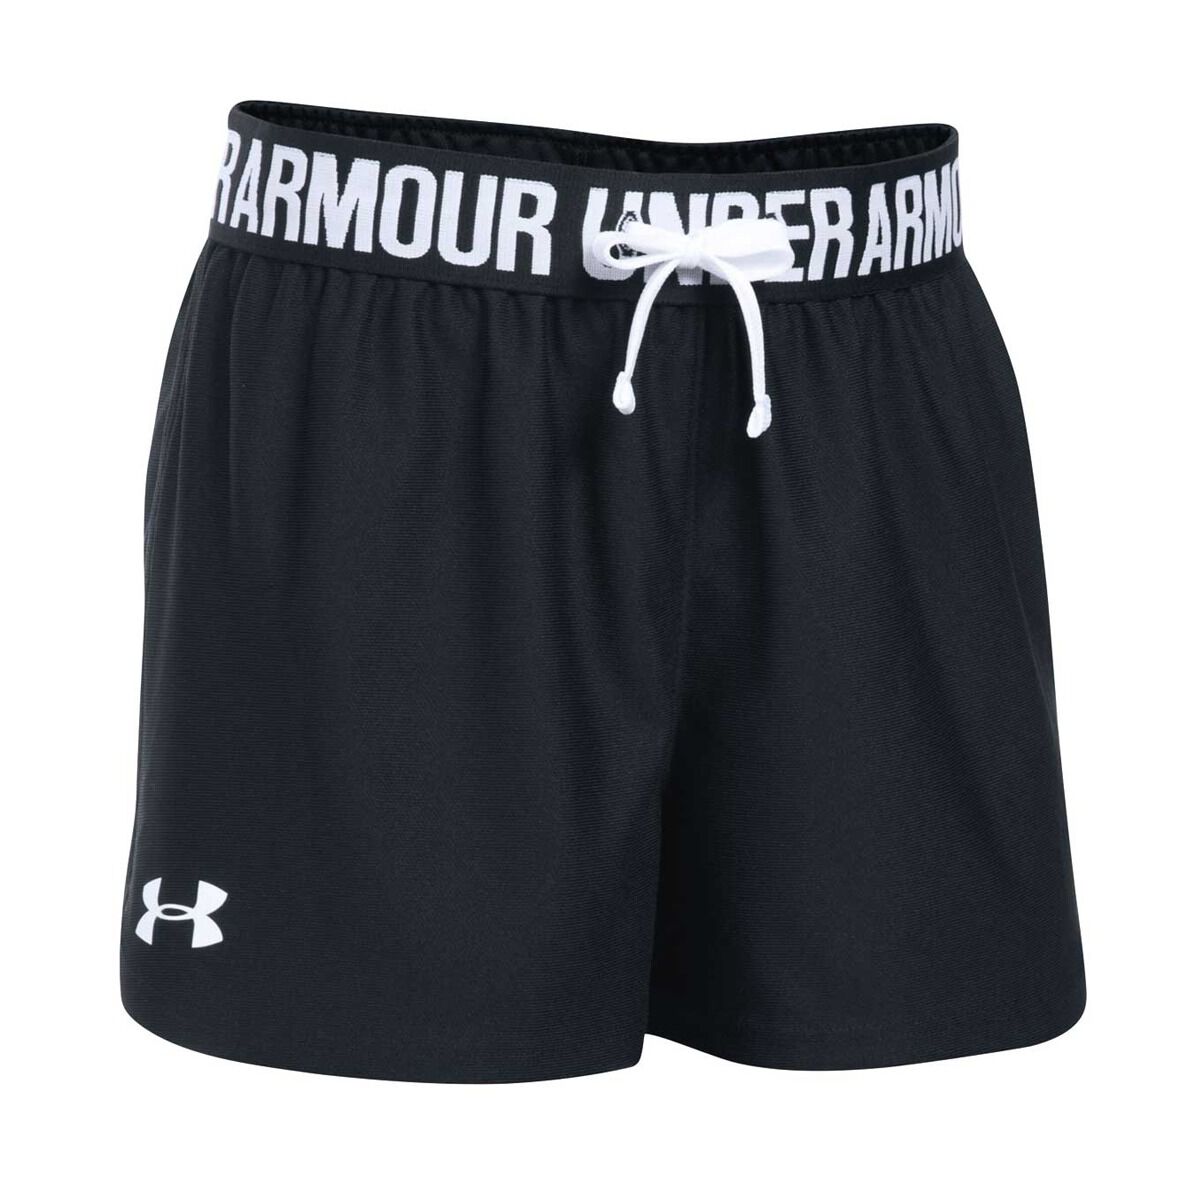 under armour girls shorts